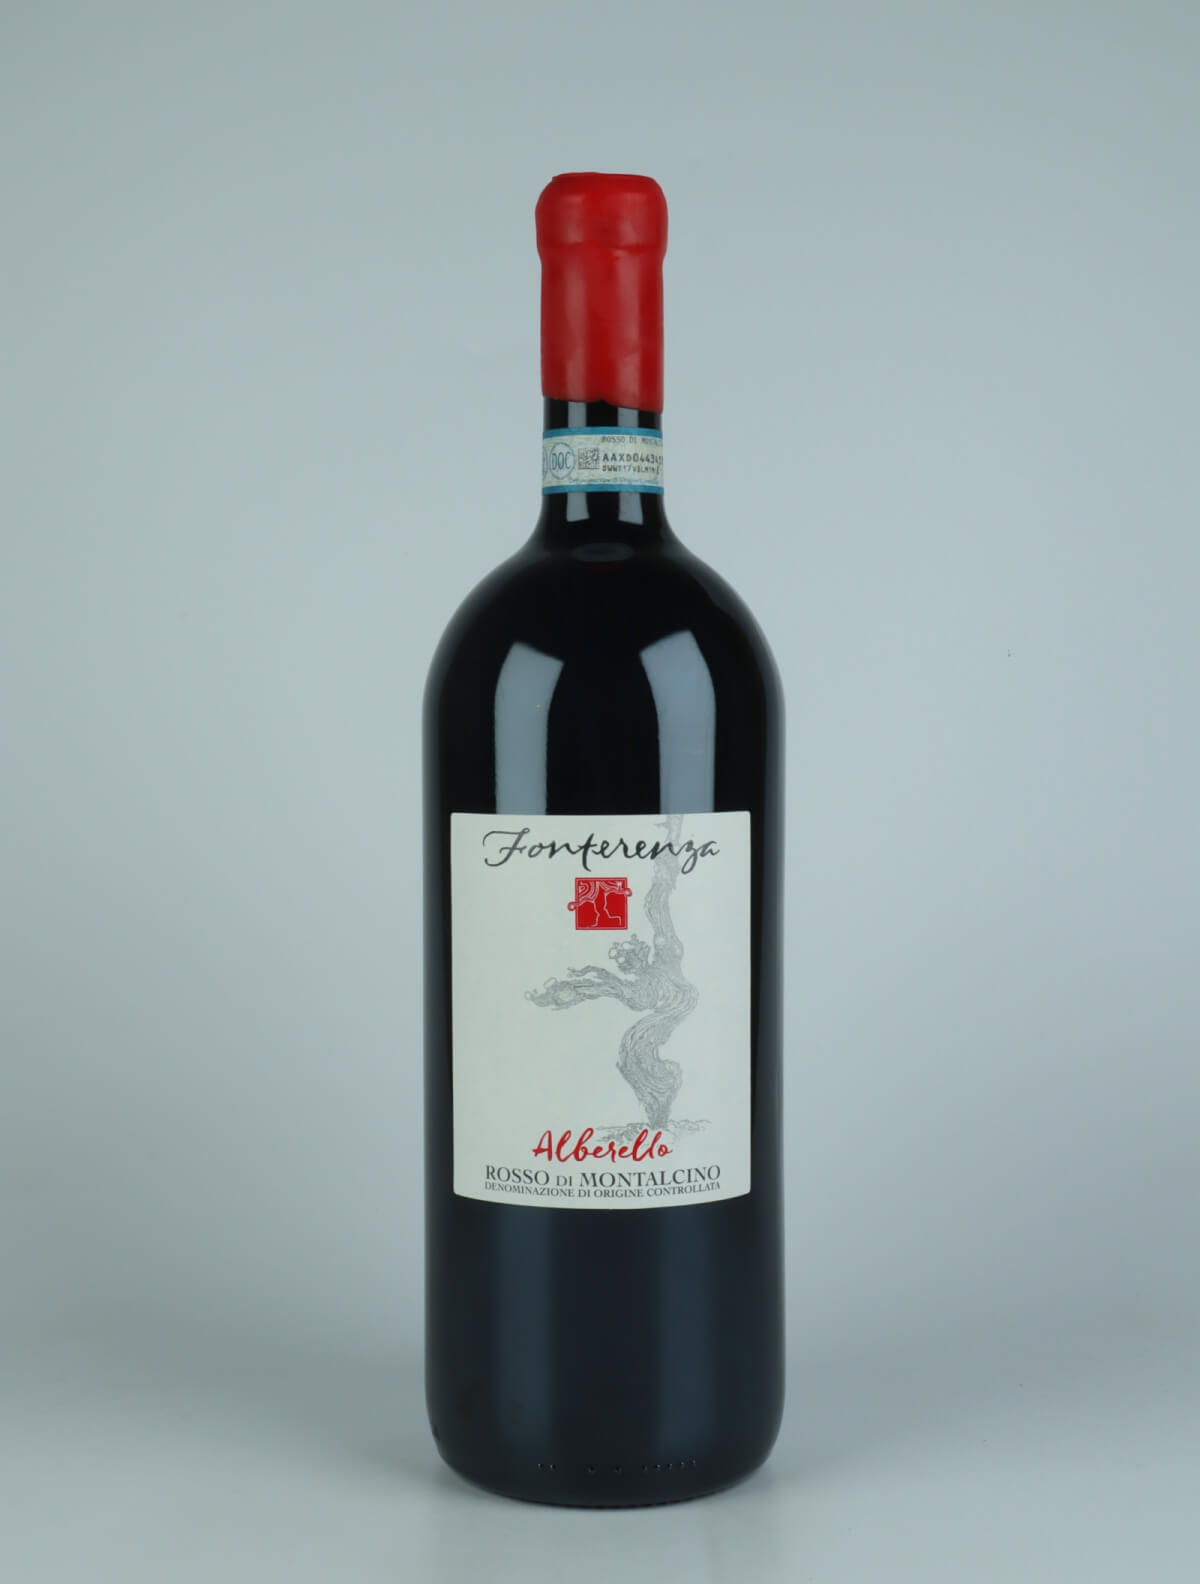 En flaske 2018 Rosso di Montalcino - Alberello Rødvin fra Fonterenza, Toscana i Italien